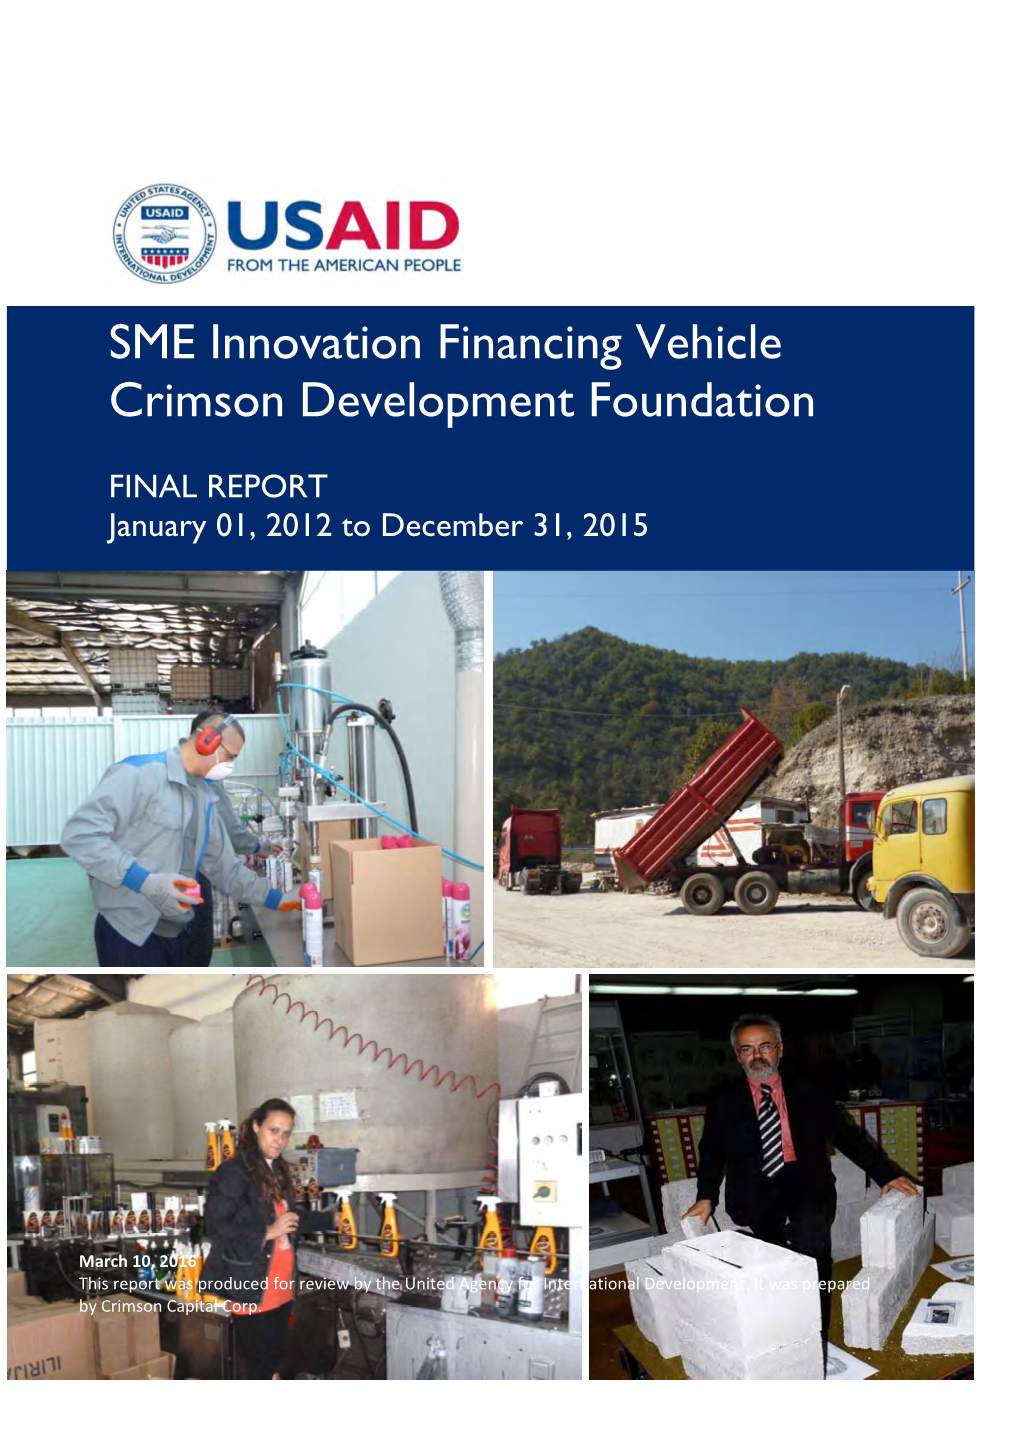 SME Innovation Financing Vehicle Crimson Development Foundation